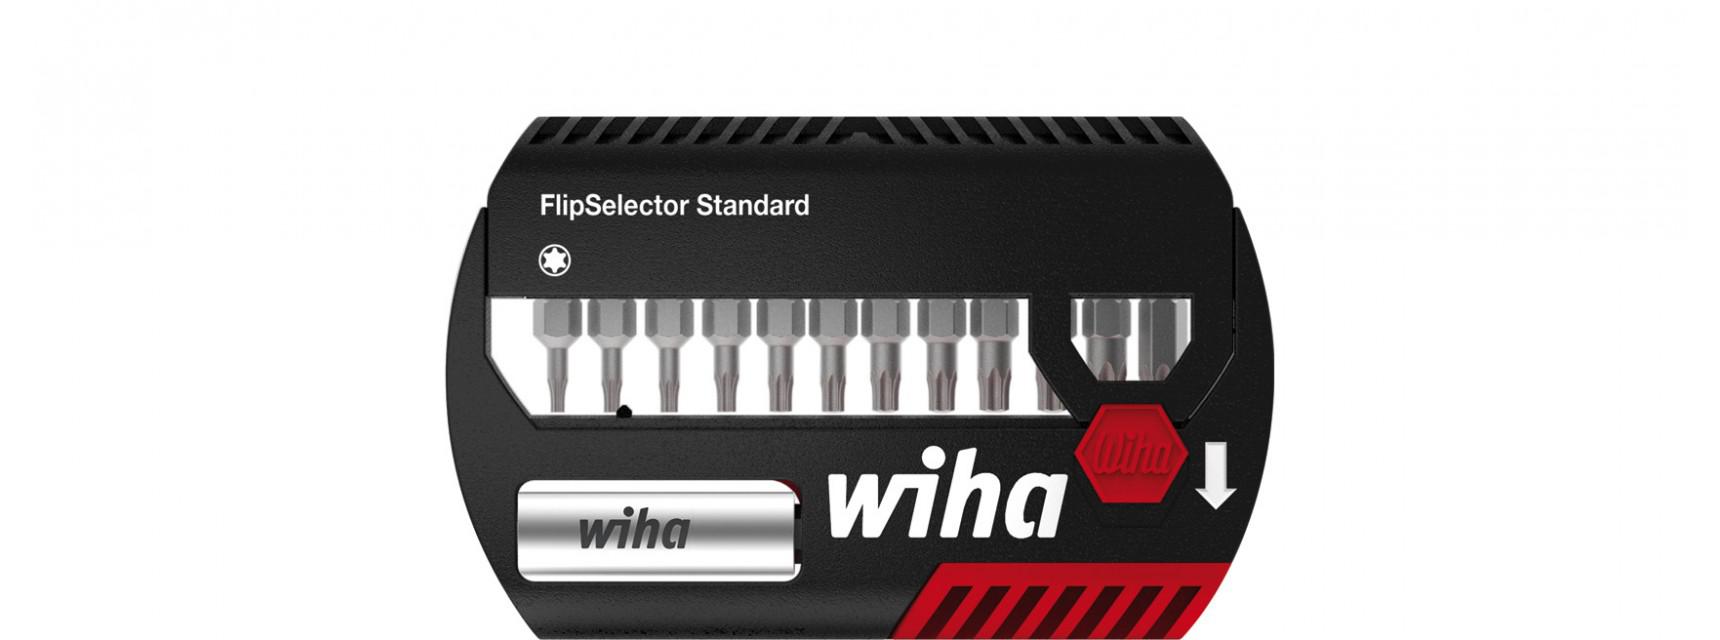 Набор бит FlipSelector Standard 25 мм SB 7947-505 WIHA 39056